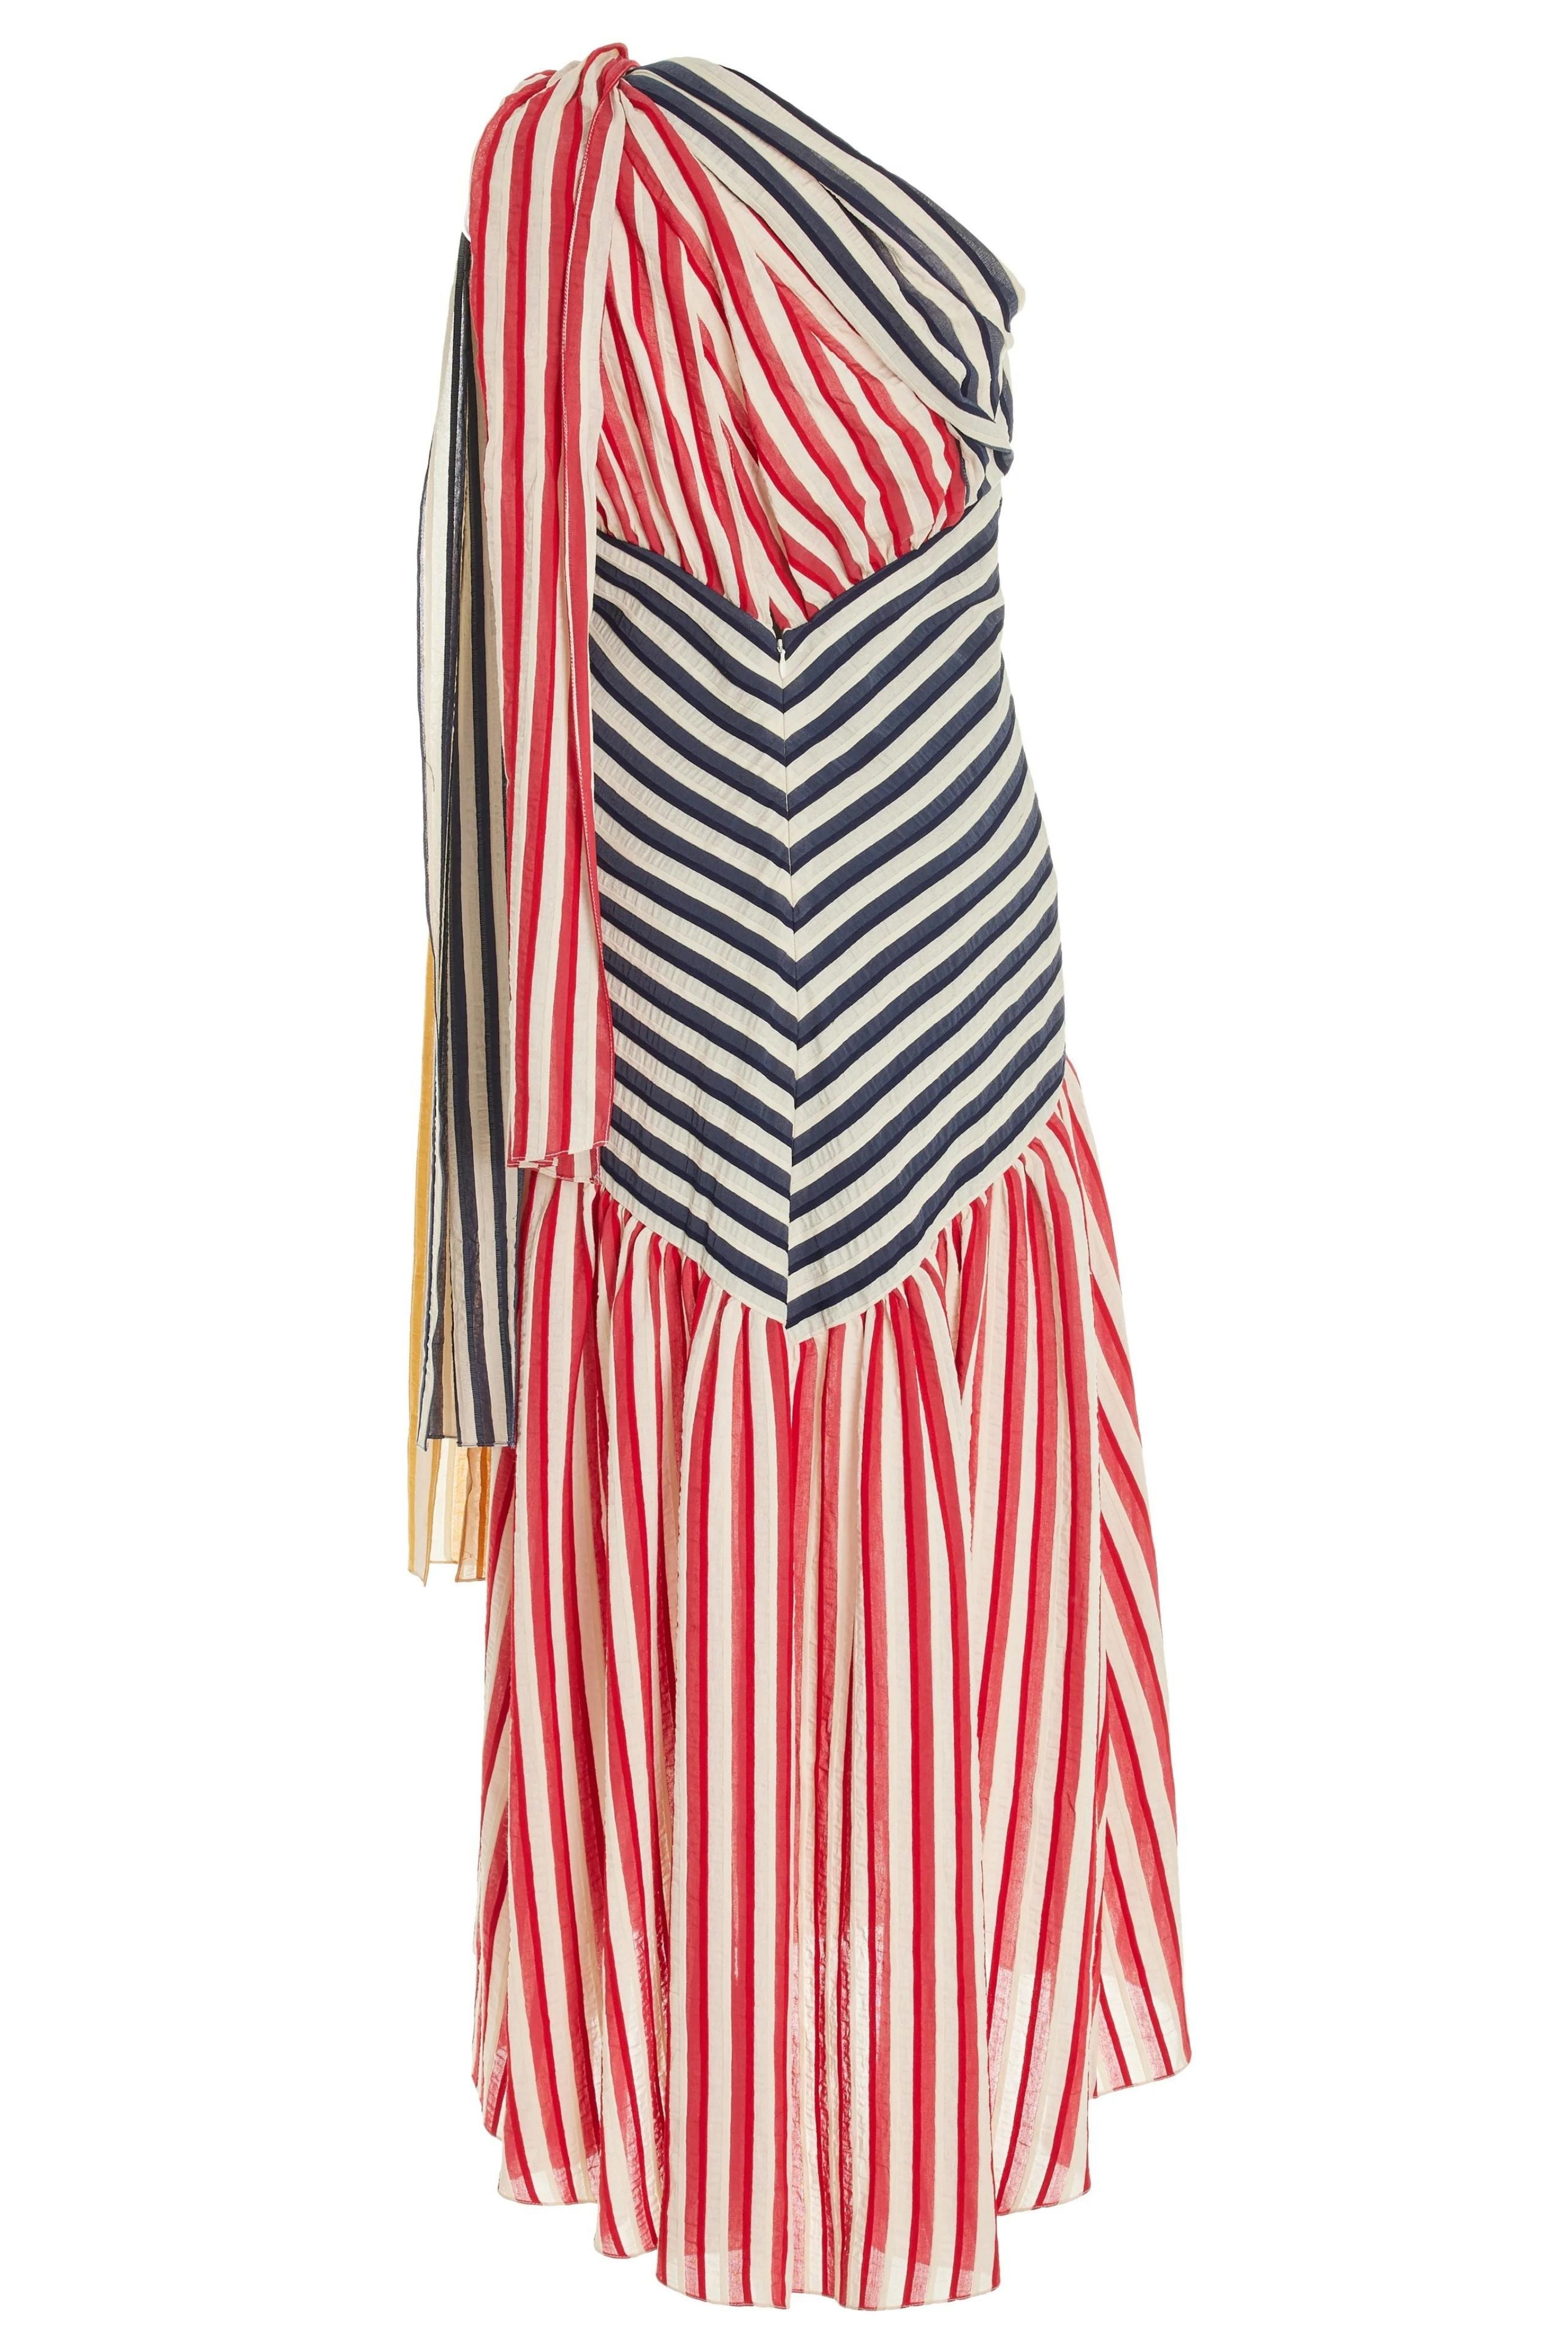 ROSIE ASSOULIN One Shoulder Stripe Seersucker Dress